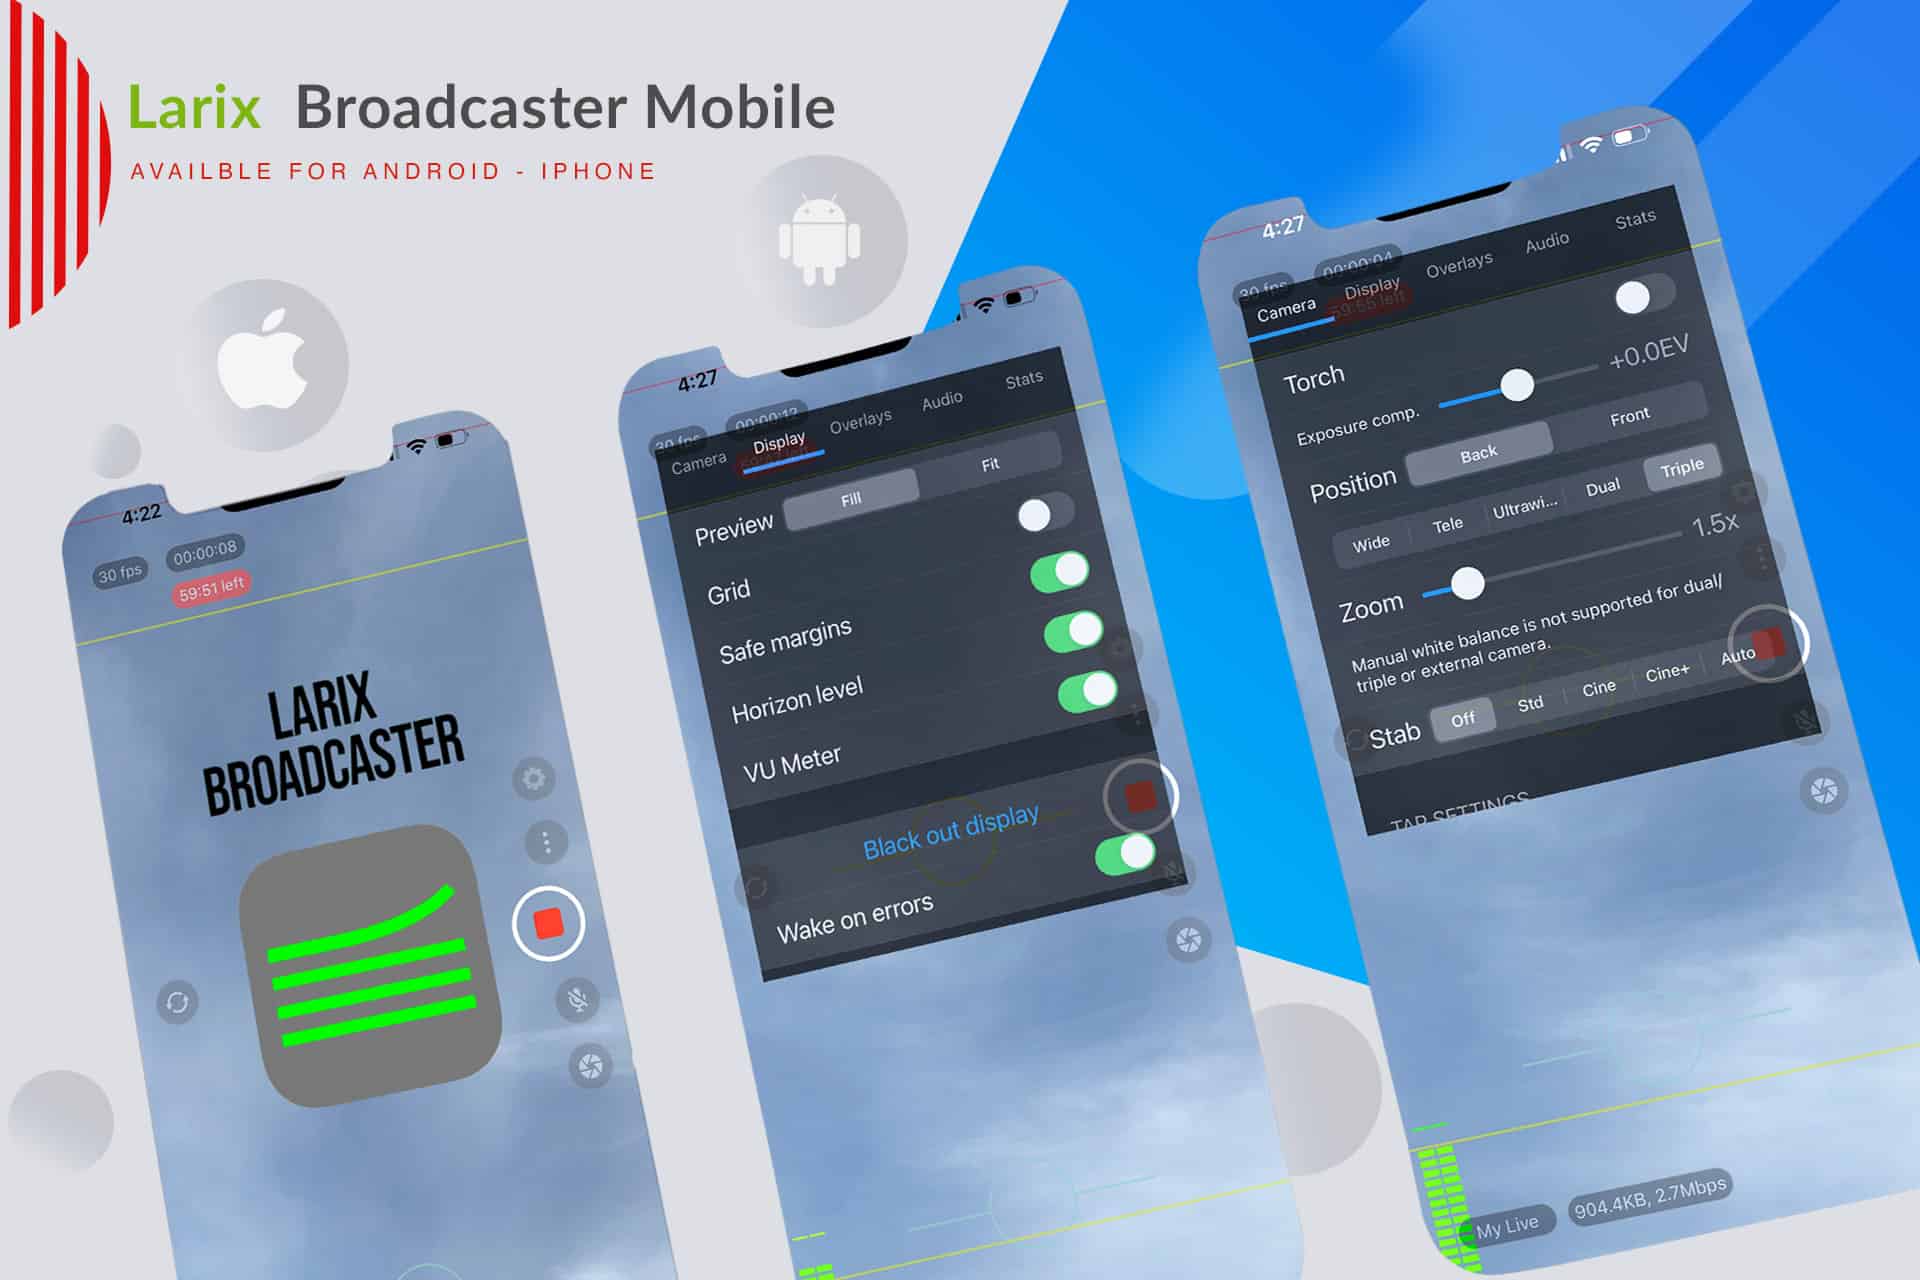 Larix Mobile Broadcaster